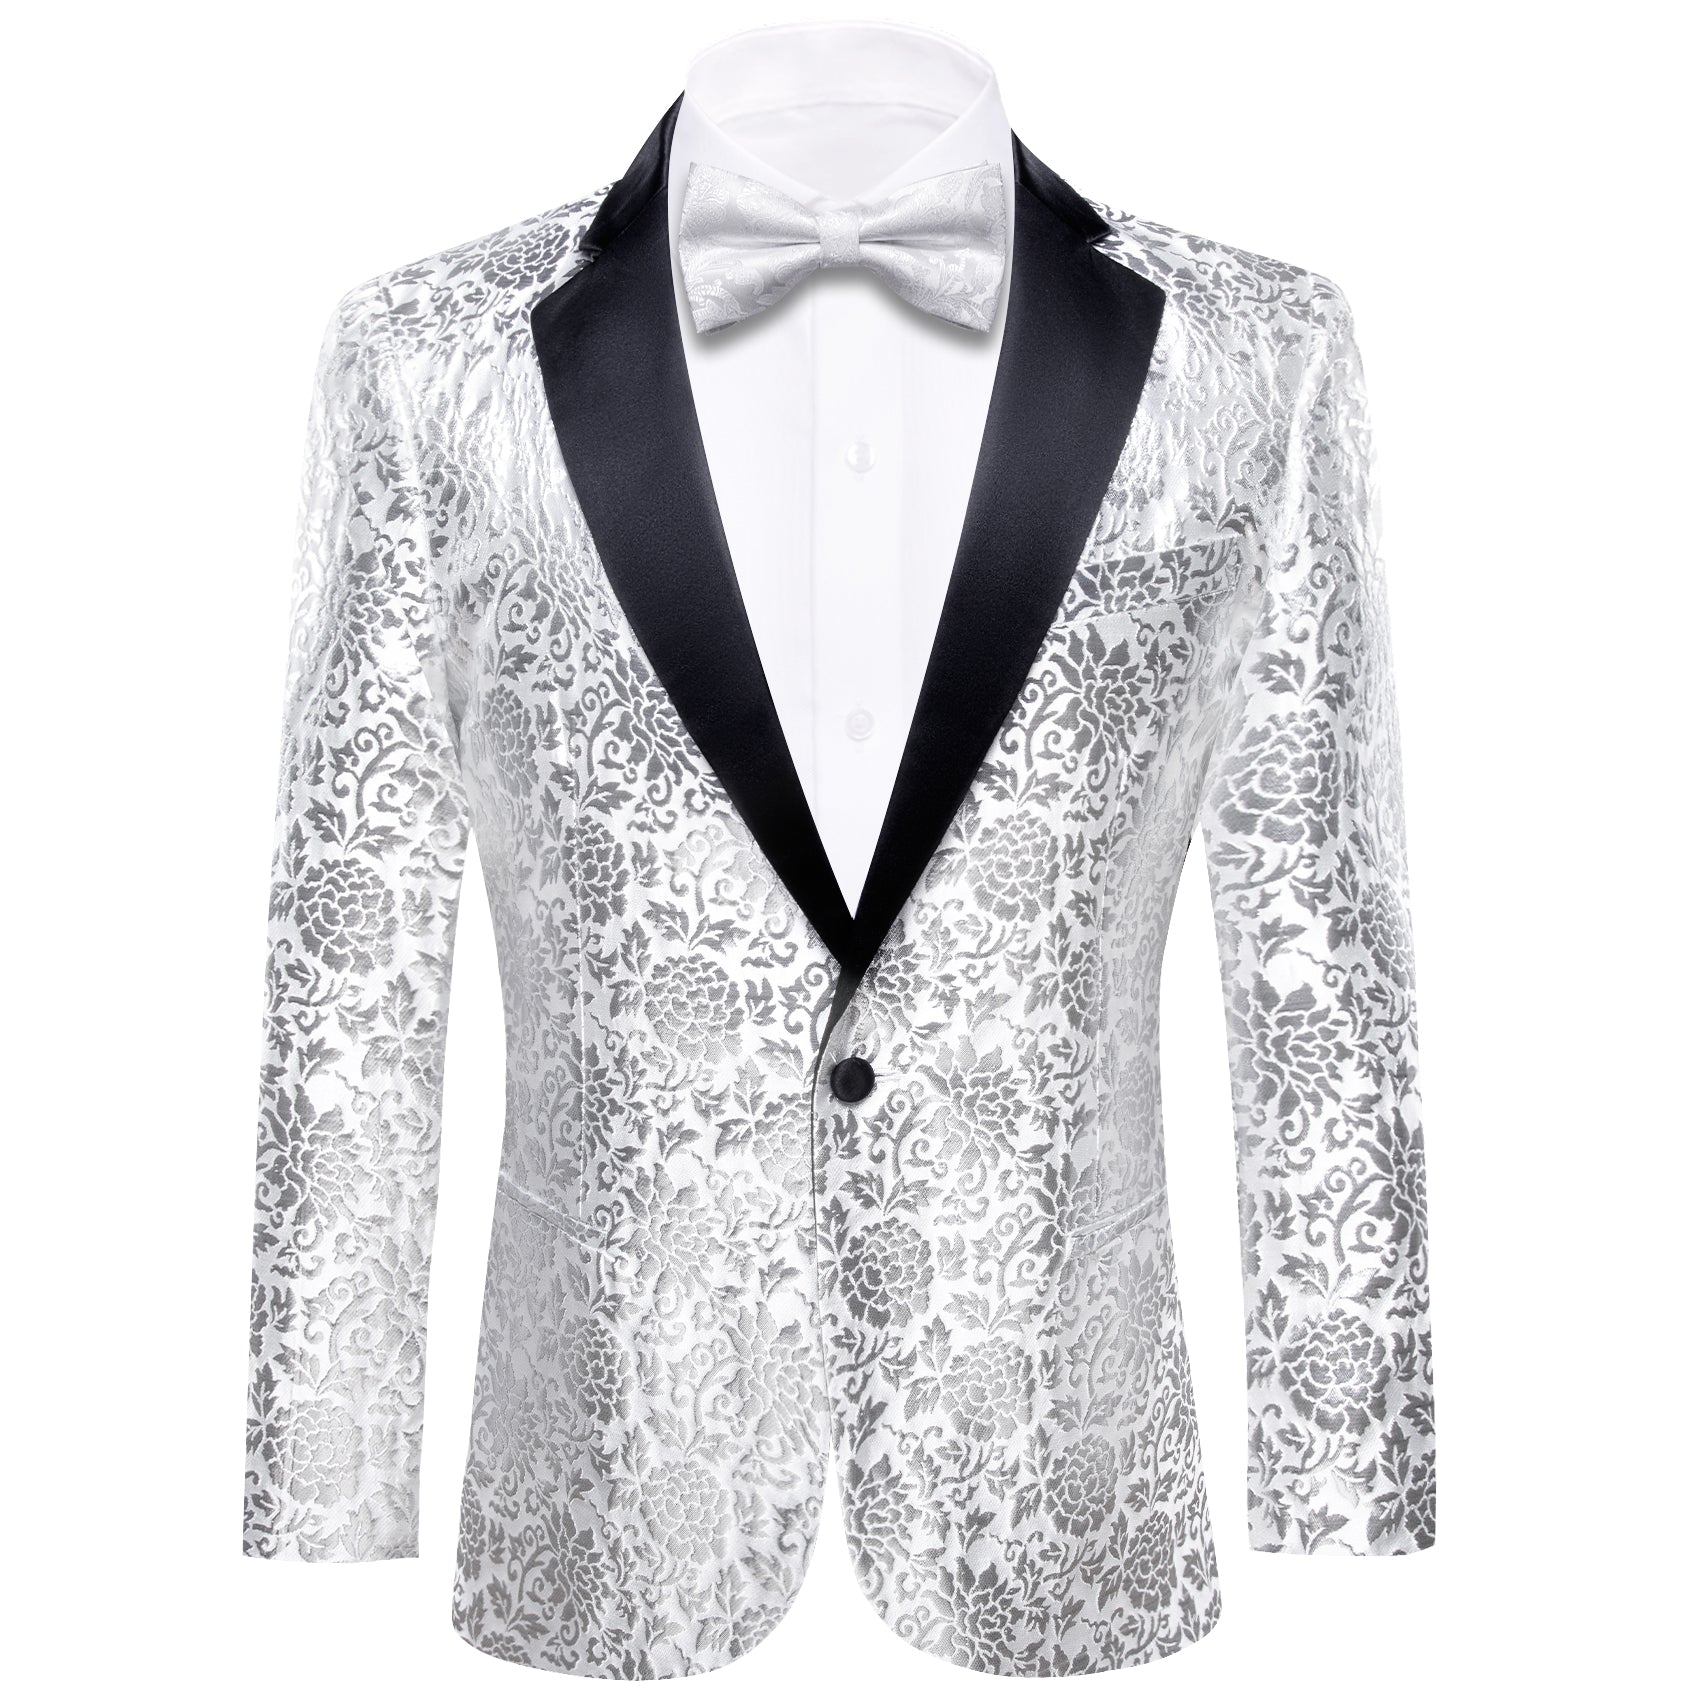 Men's Dress Party White Floral Suit Jacket Slim One Button Stylish Blazer